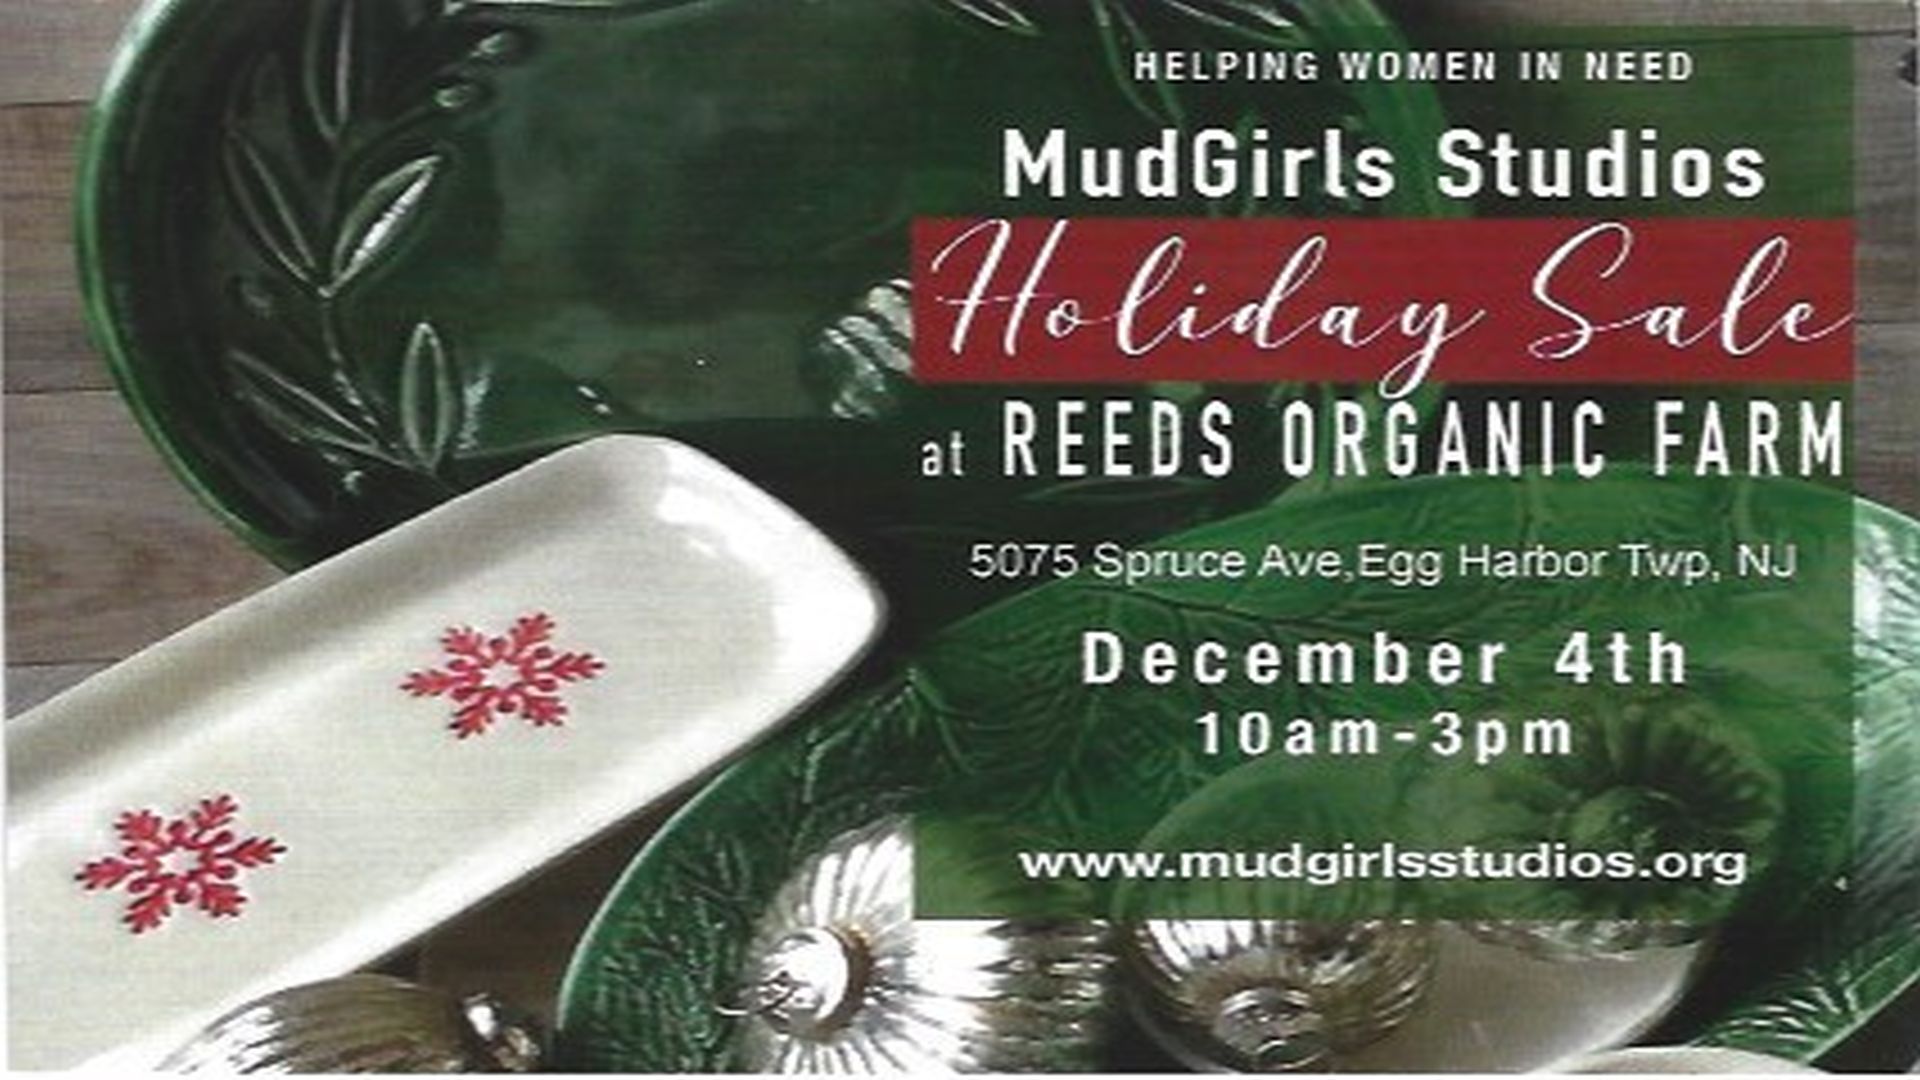 MudGirls Studios Holiday Sale, Egg Harbor Township, New Jersey, United States